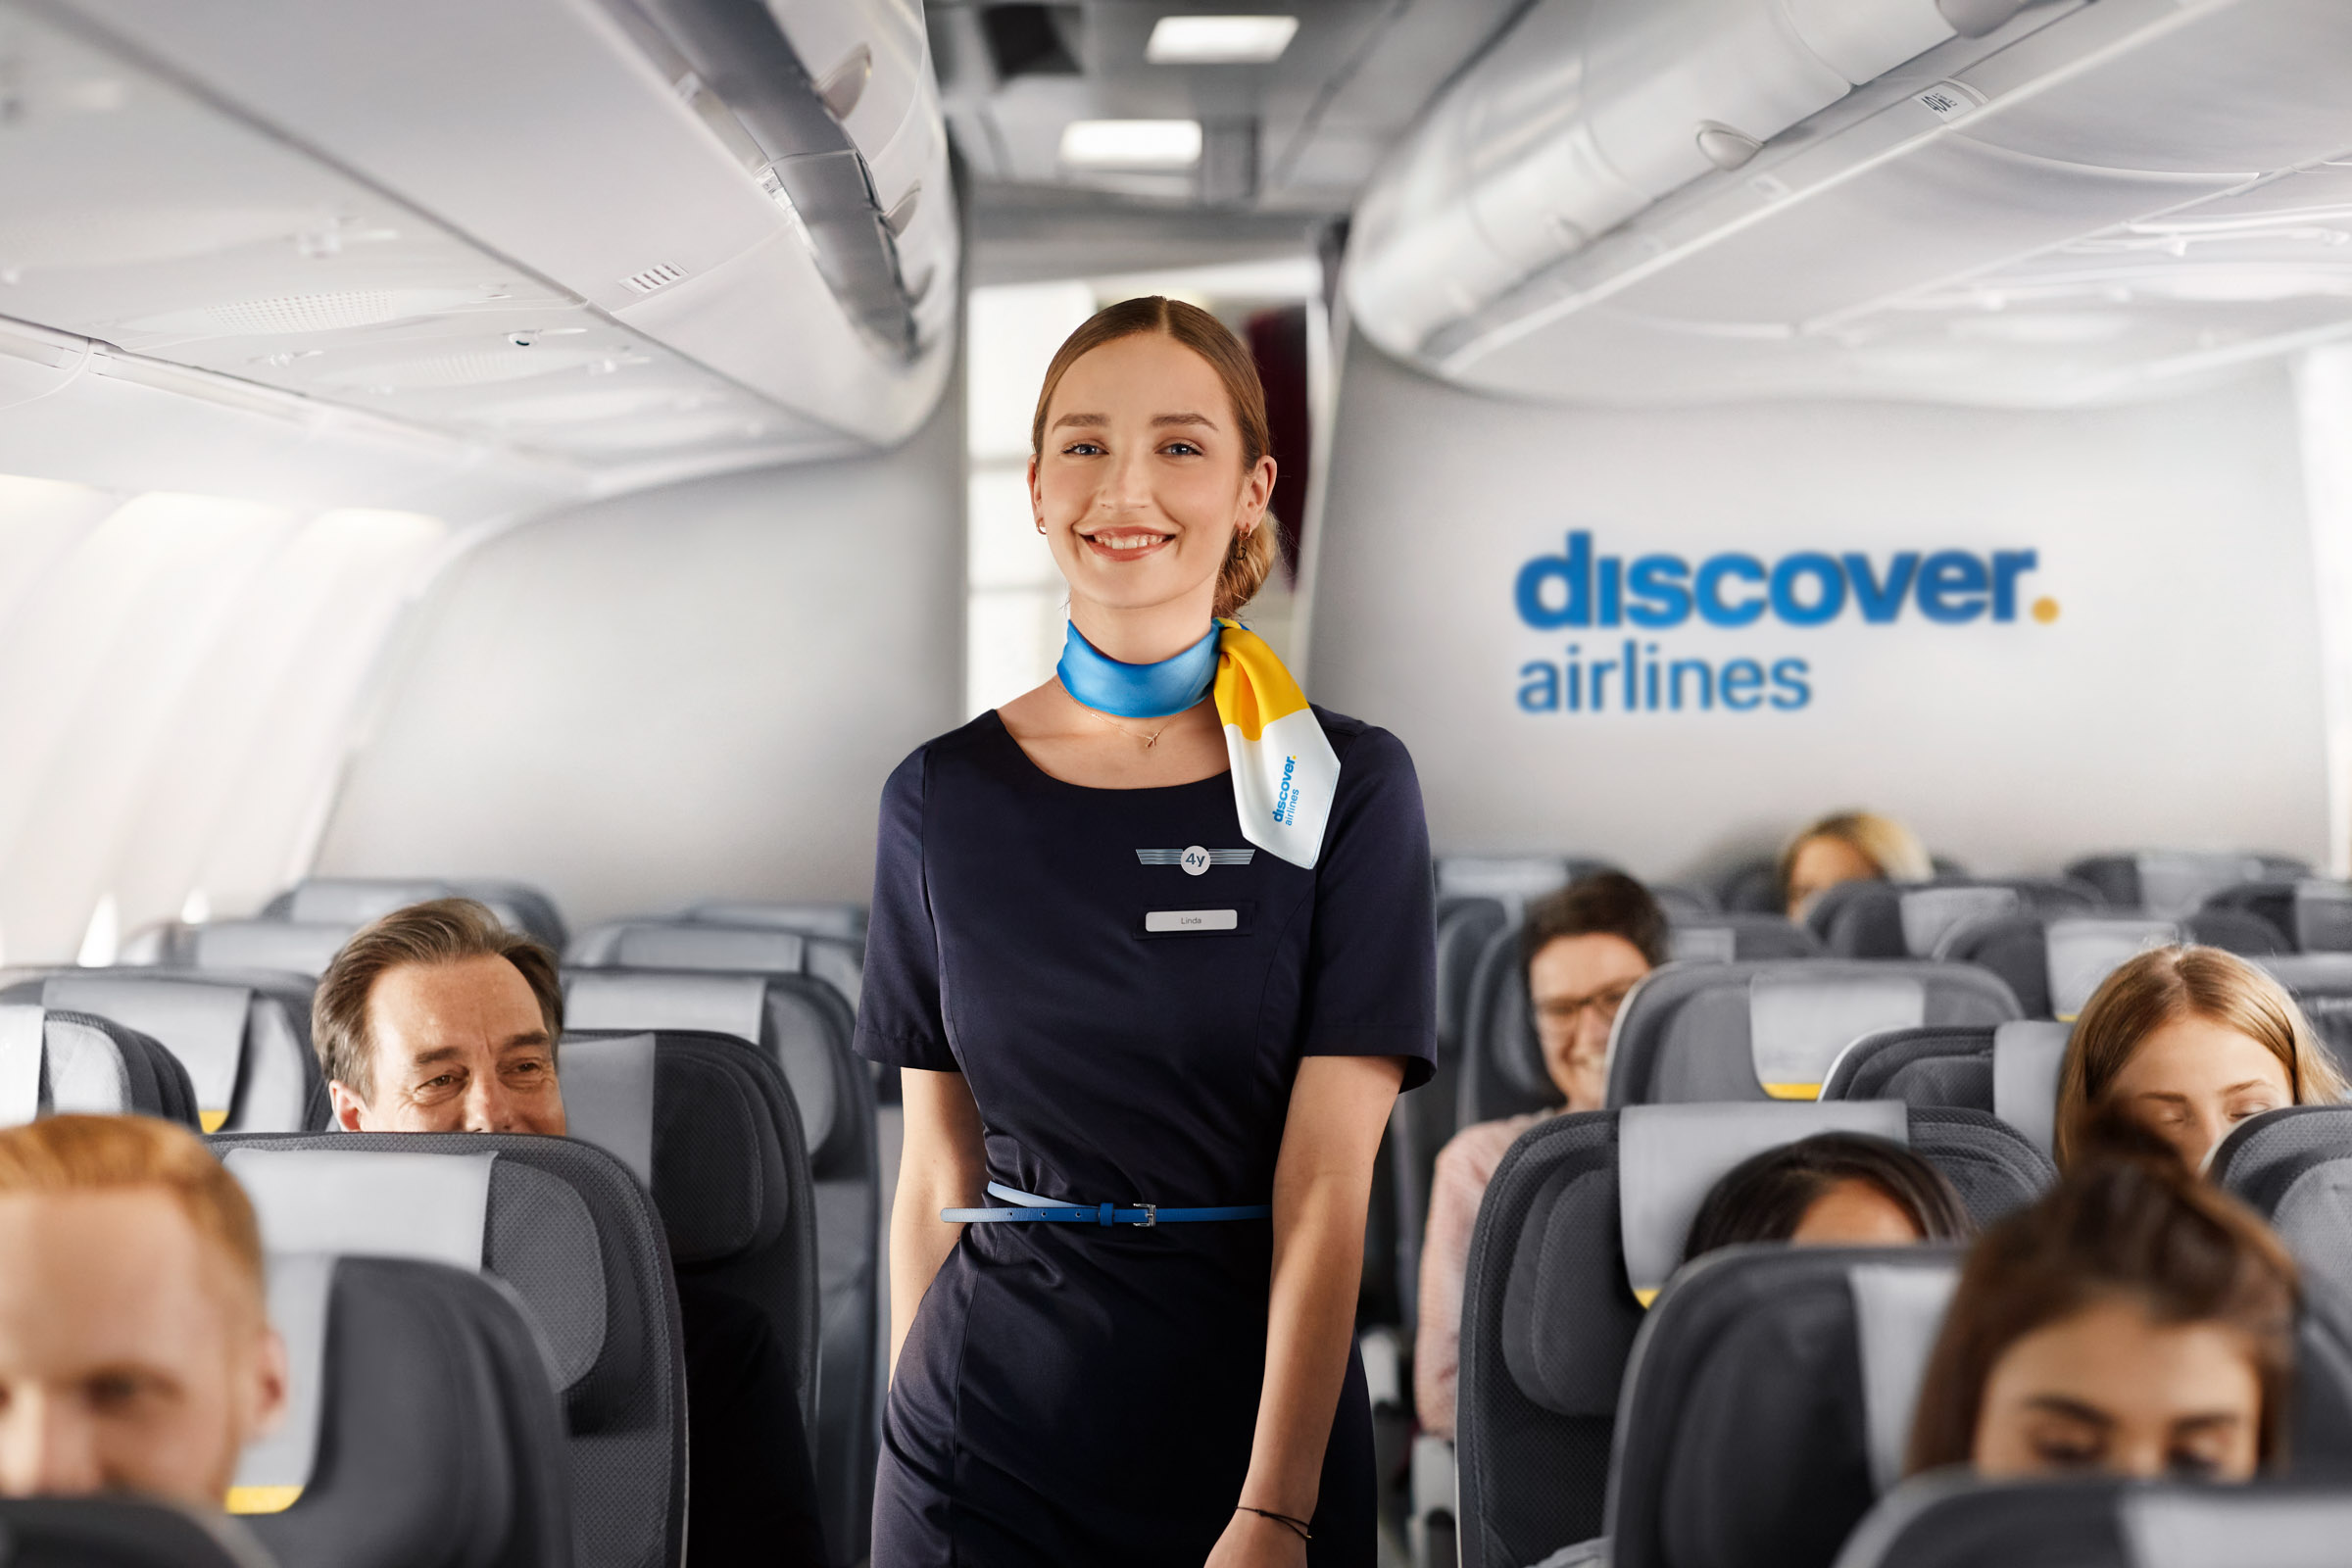 Lufthansa, Turistik Noktalara “Discover” Markasıyla Uçacak